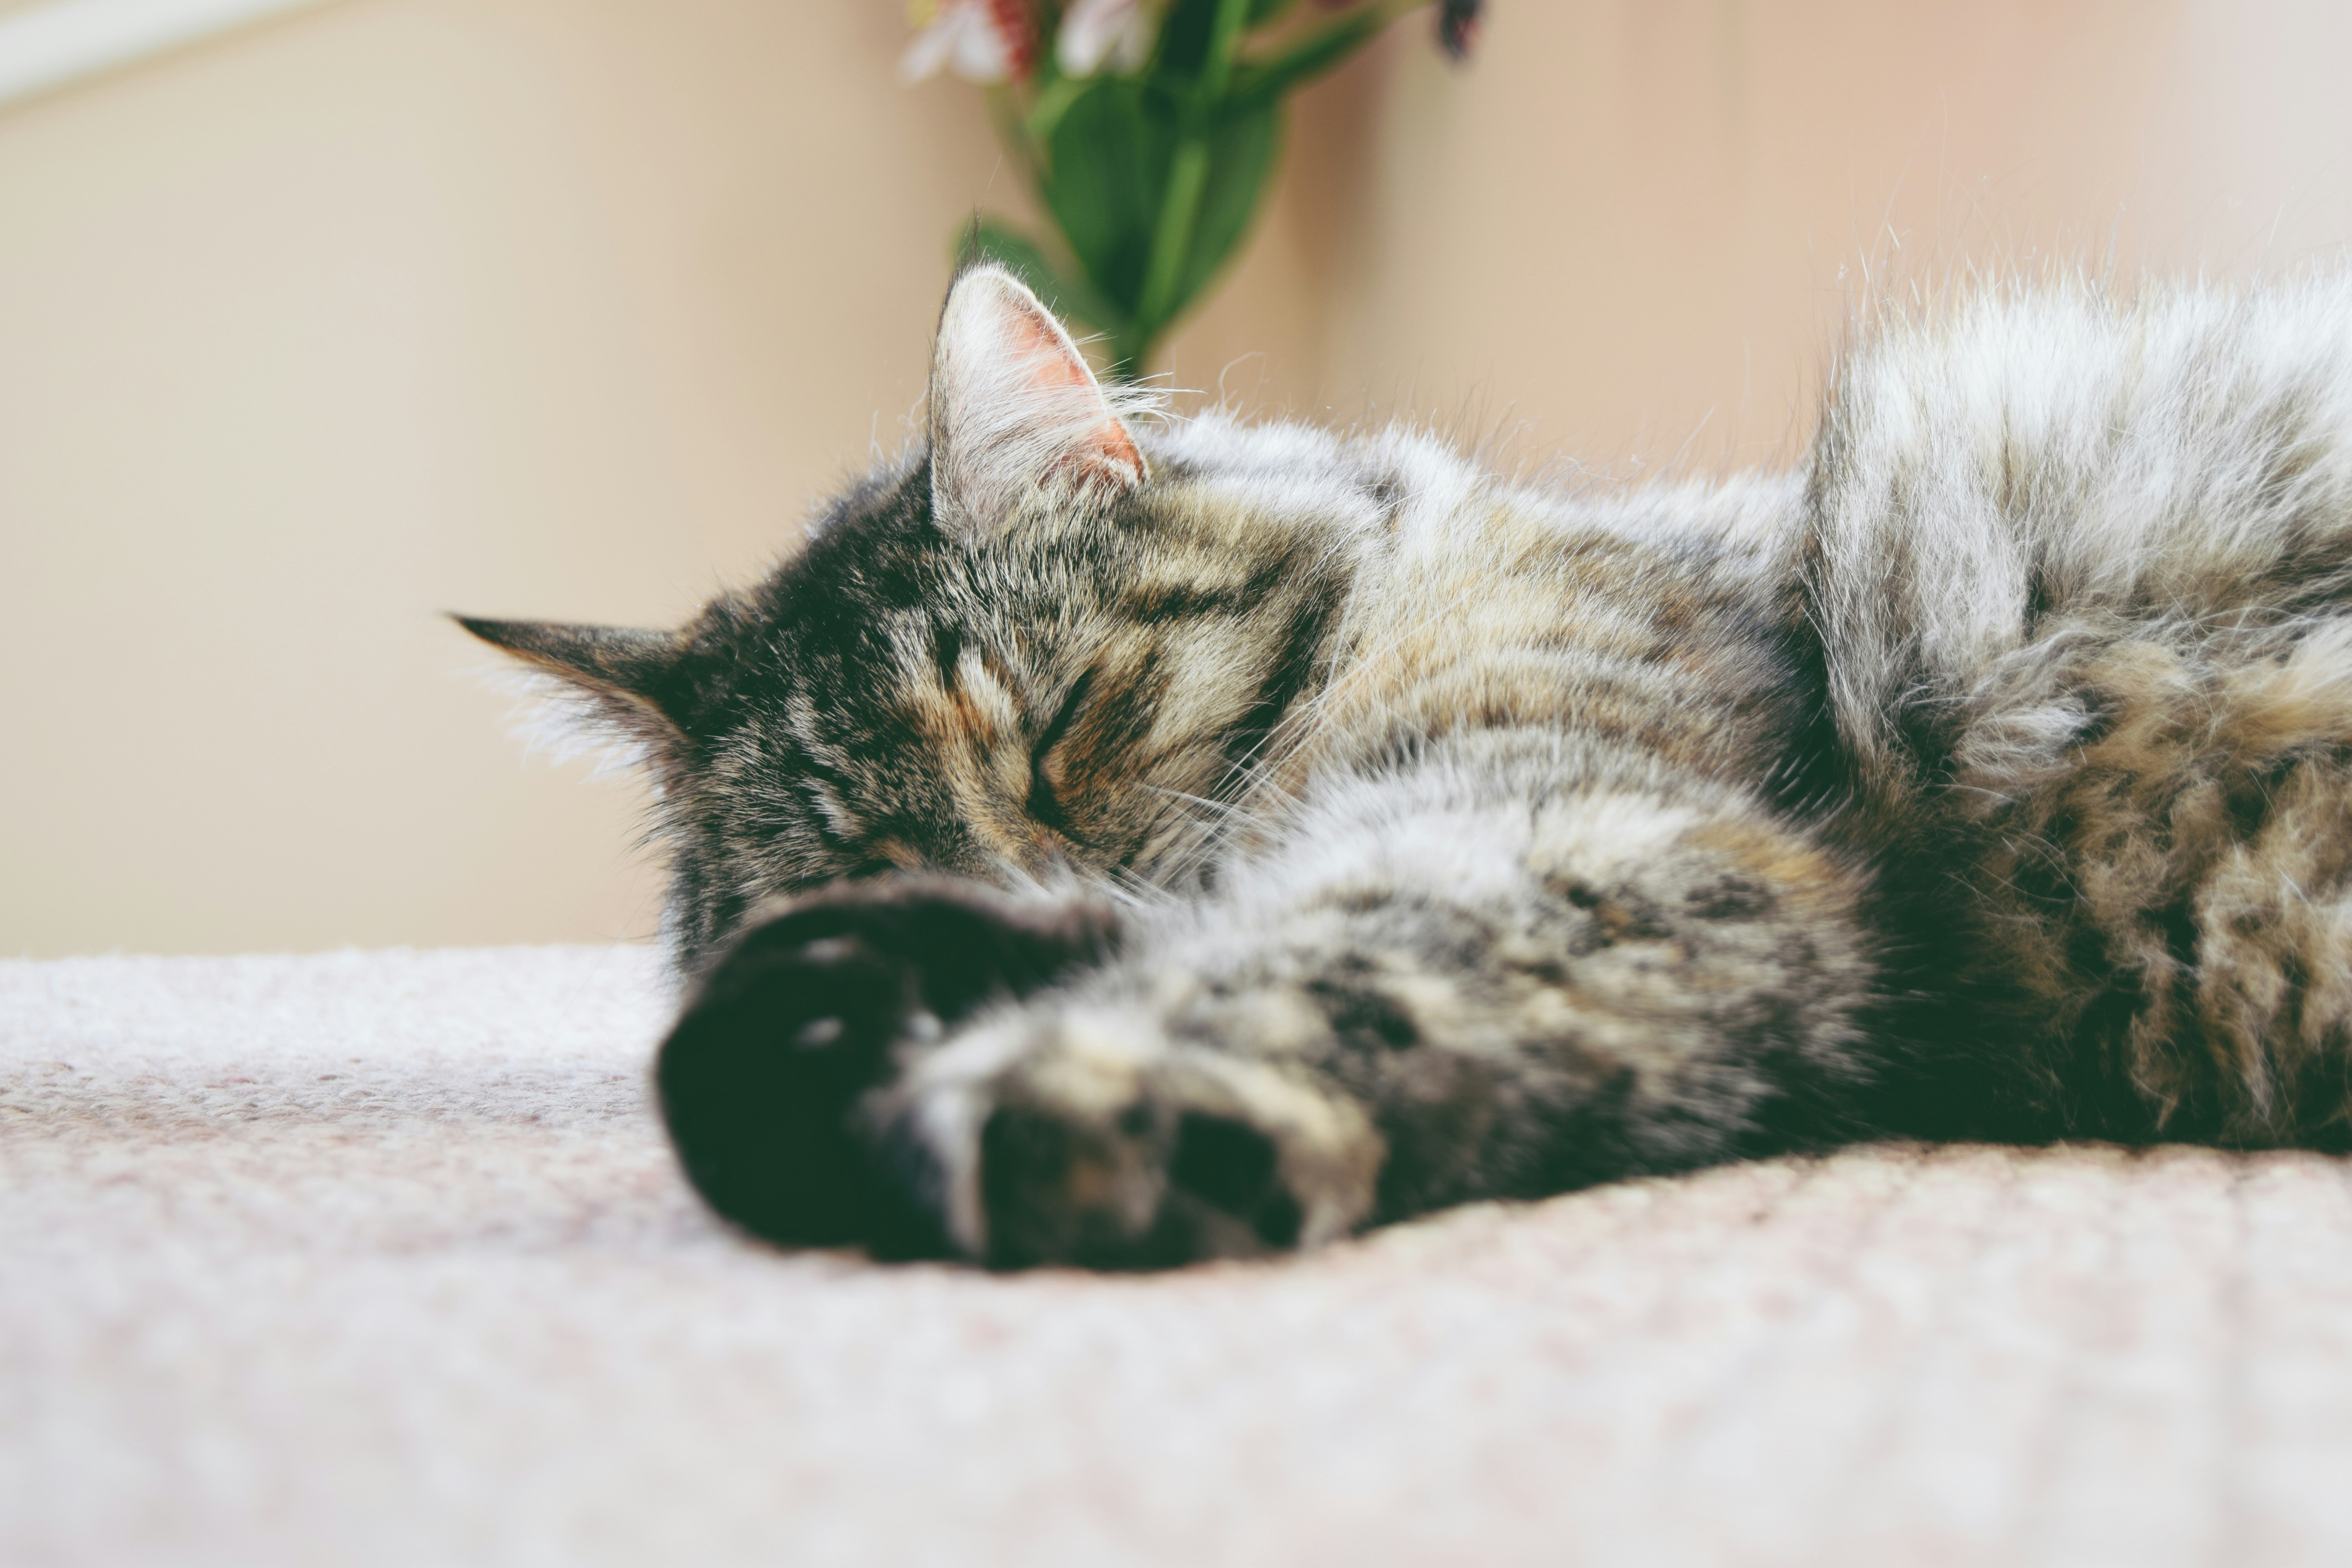 gray cat sleeping on mat